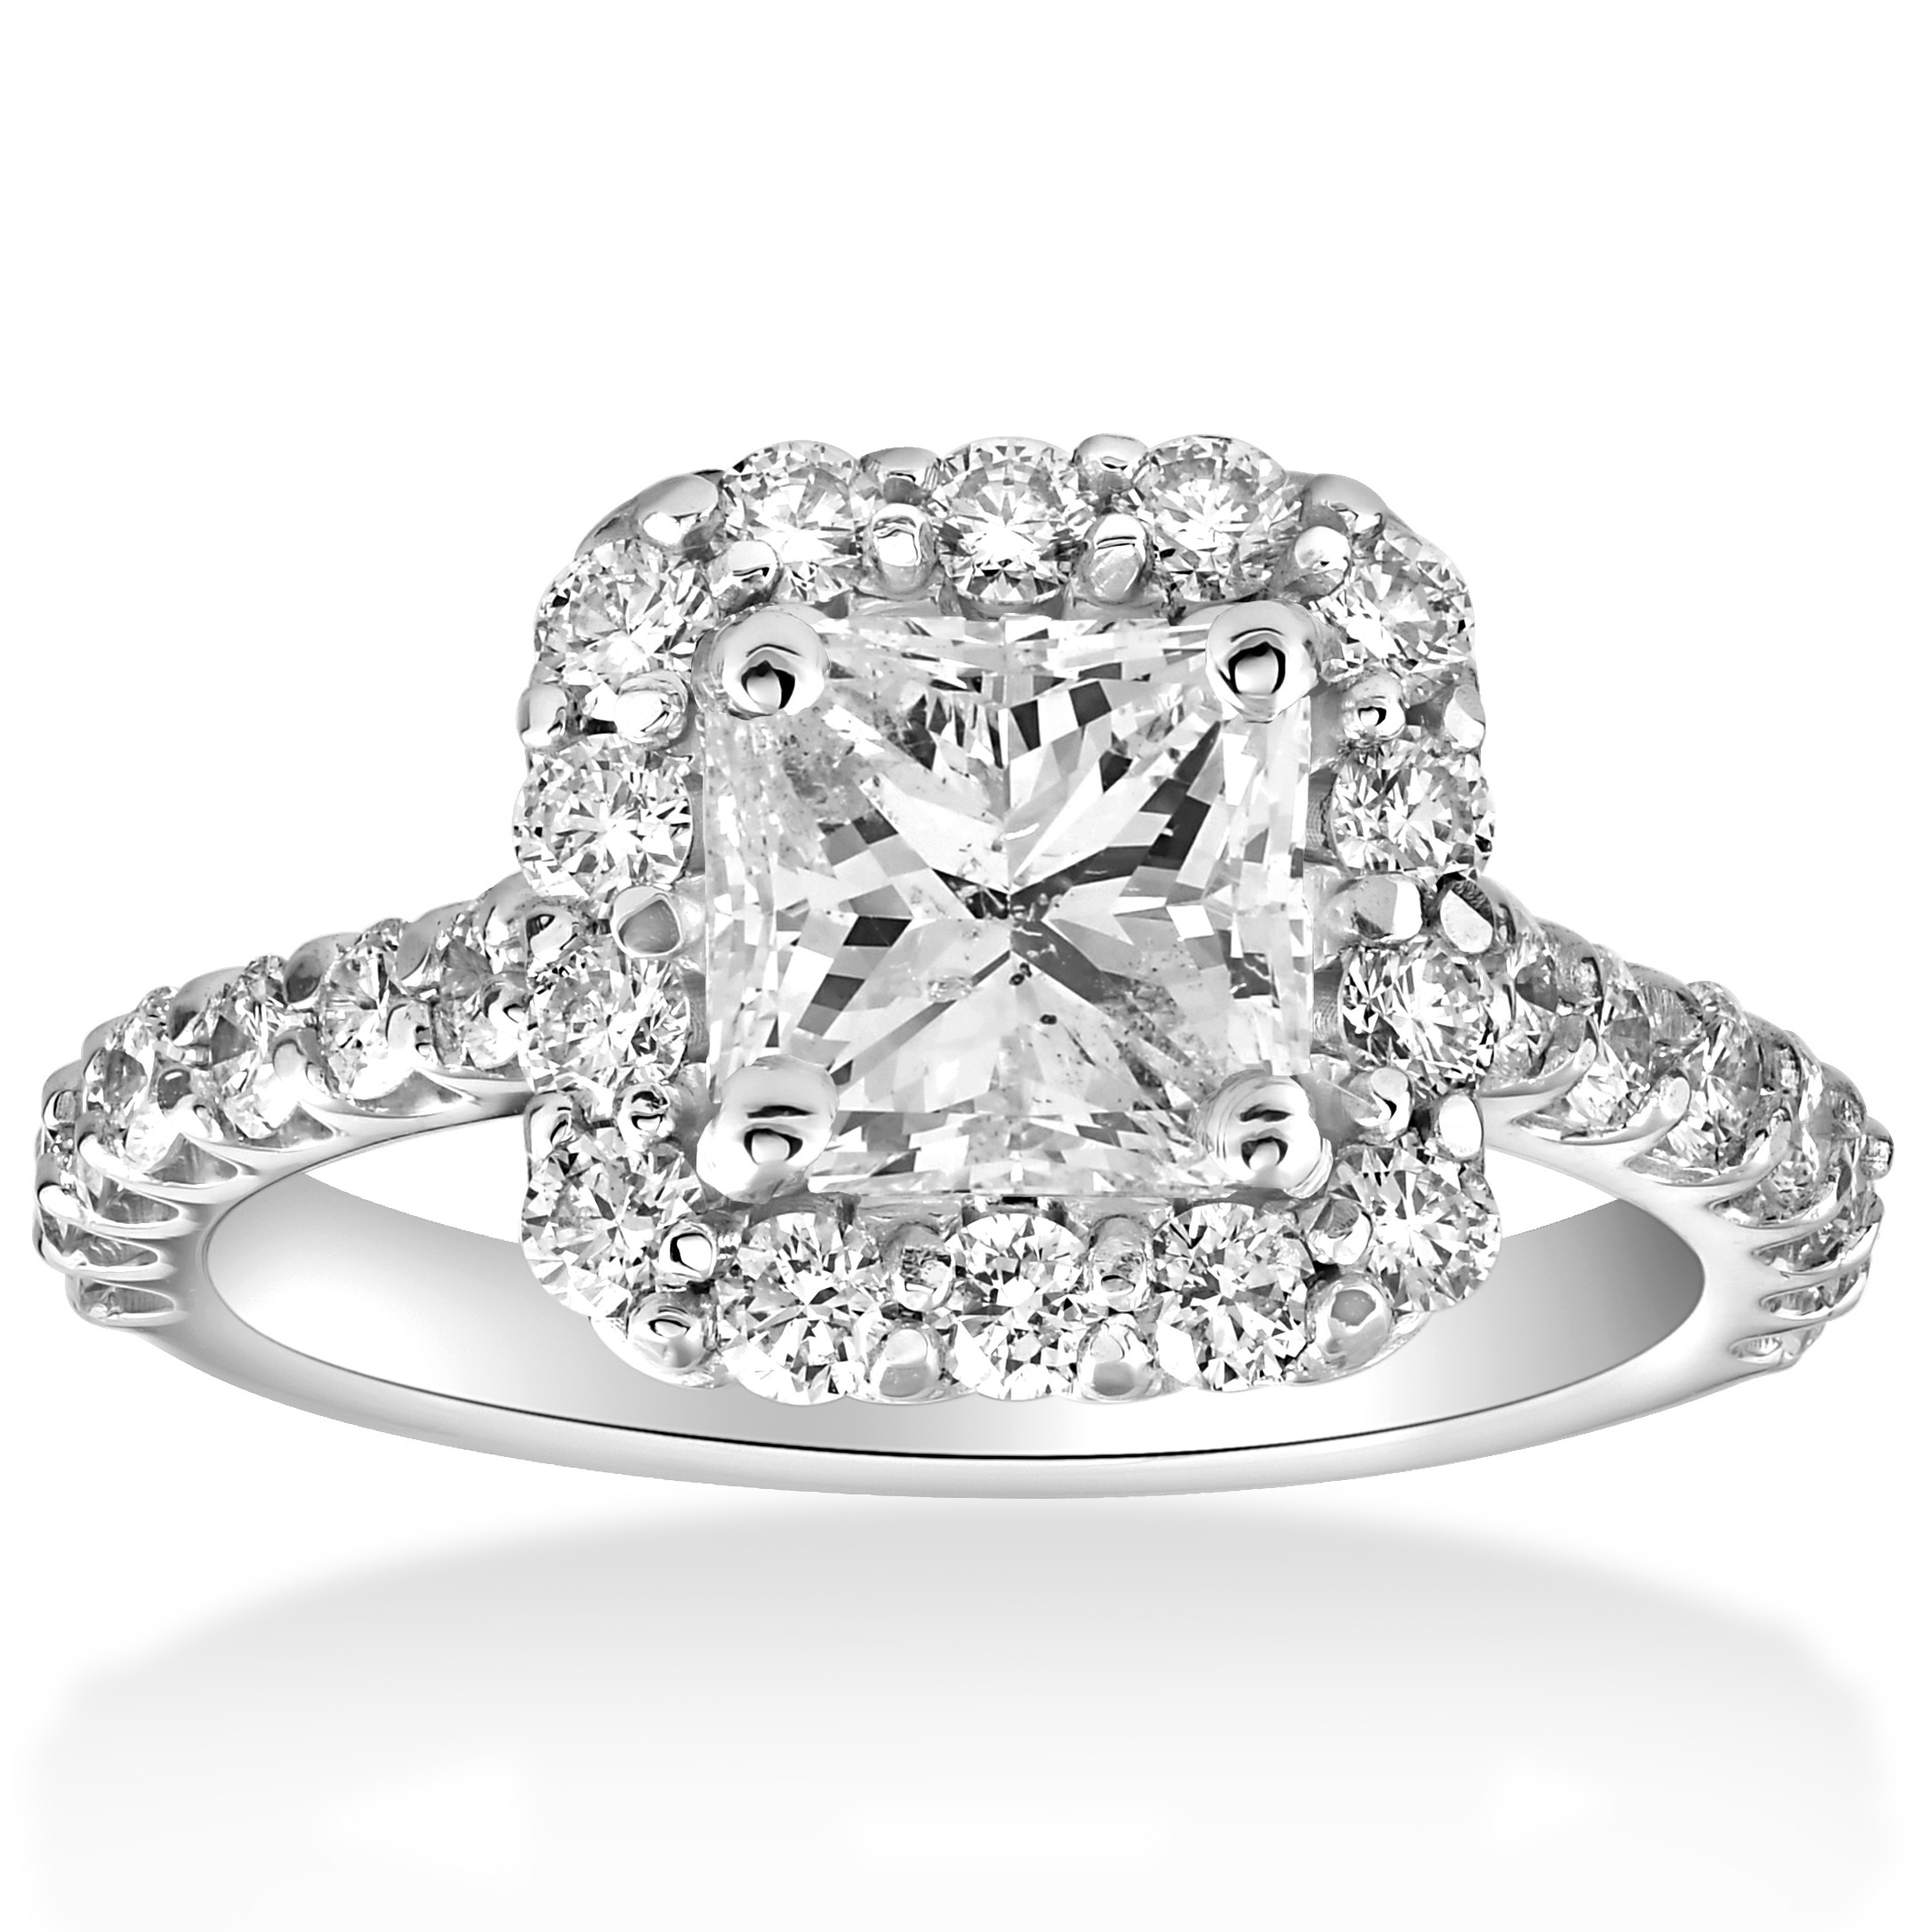 Princess Cut Halo Diamond Engagement Rings
 2 cttw Halo Princess Cut Solitaire Diamond Engagement Ring